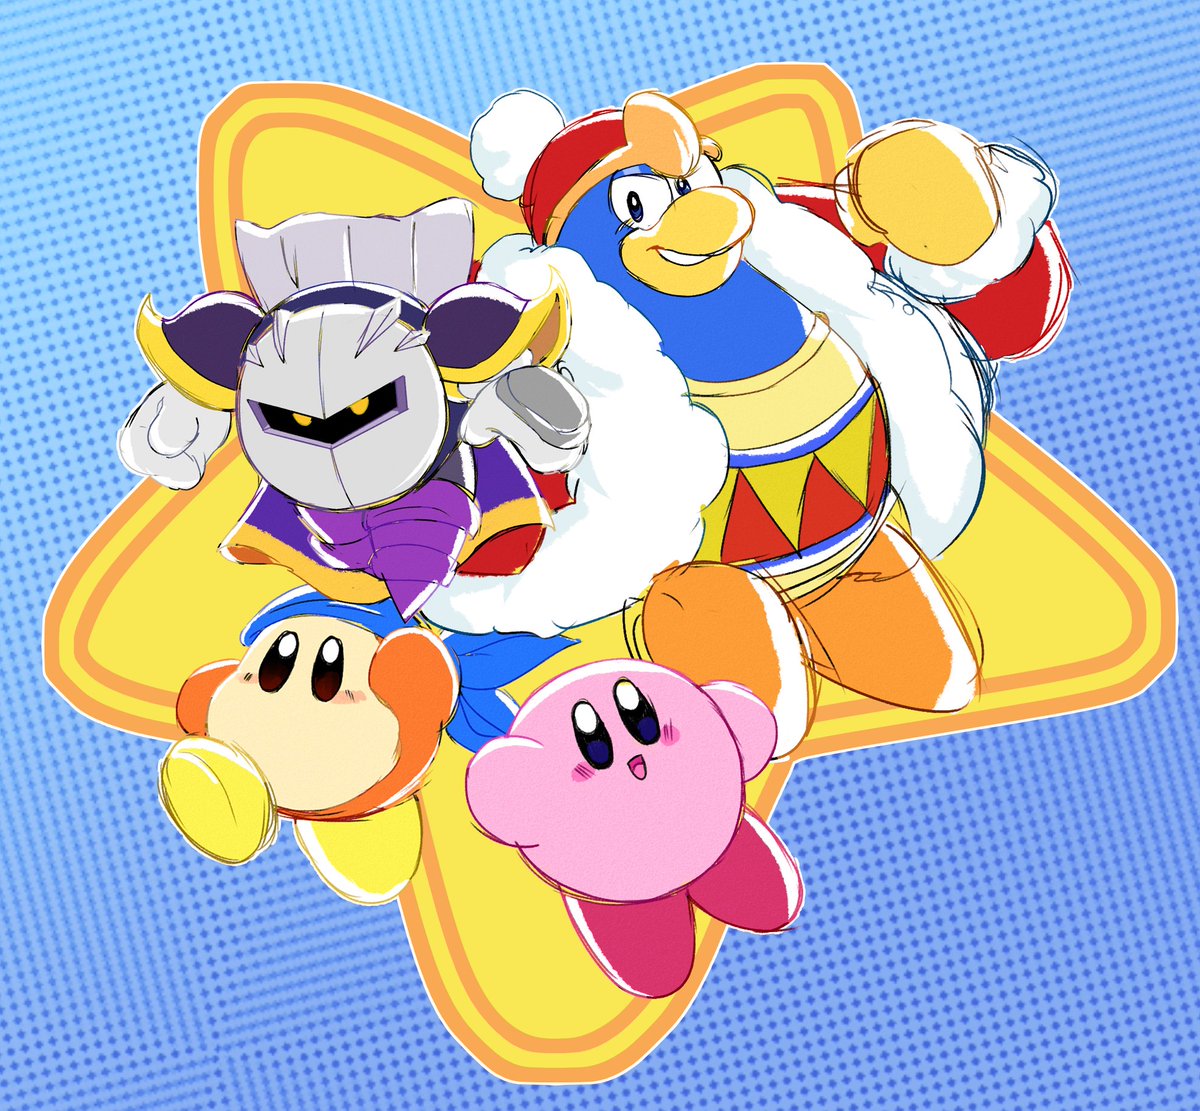 the legendary heroes of dreamland !!! #Kirby #myart #fanart #Nintendo